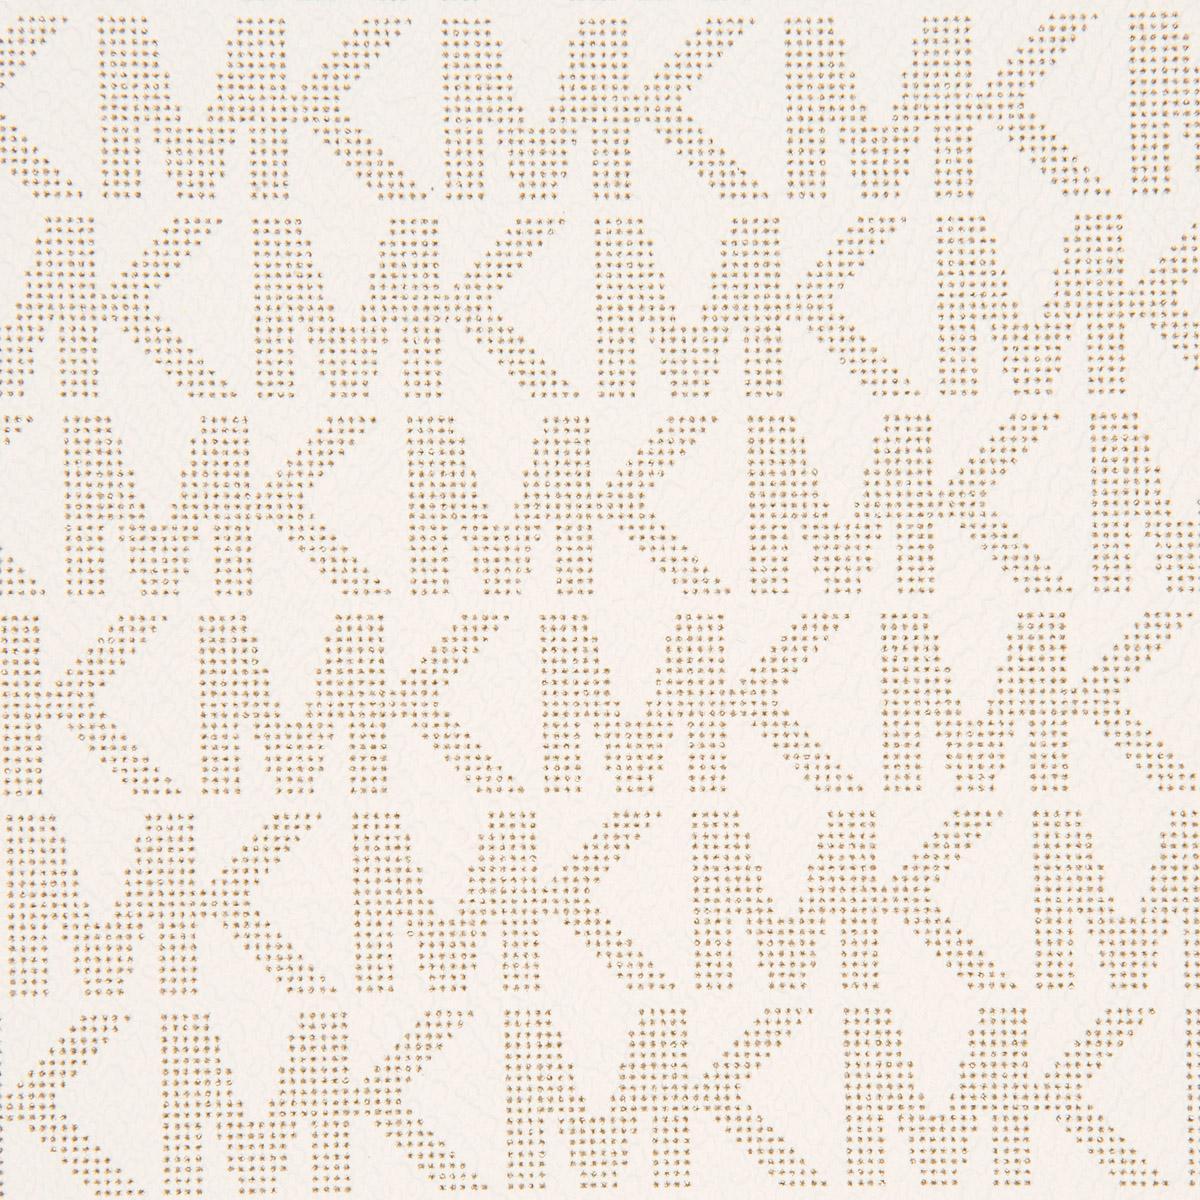 michael kors logo pattern